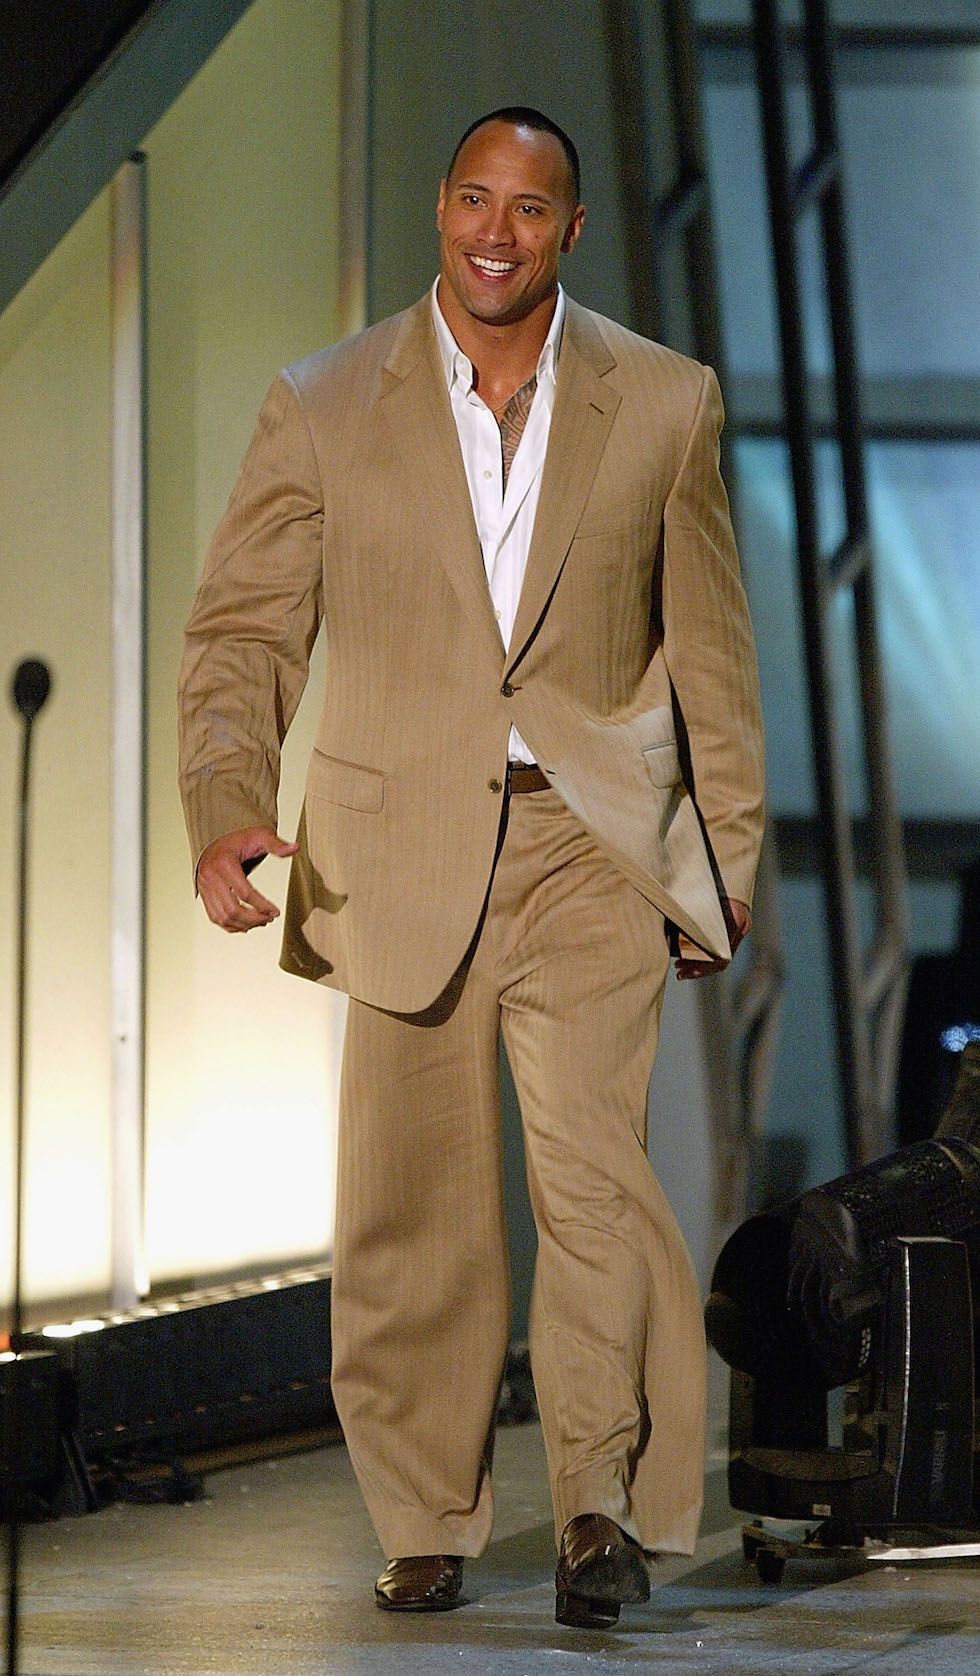 Dwayne Johnson Fashion and Style